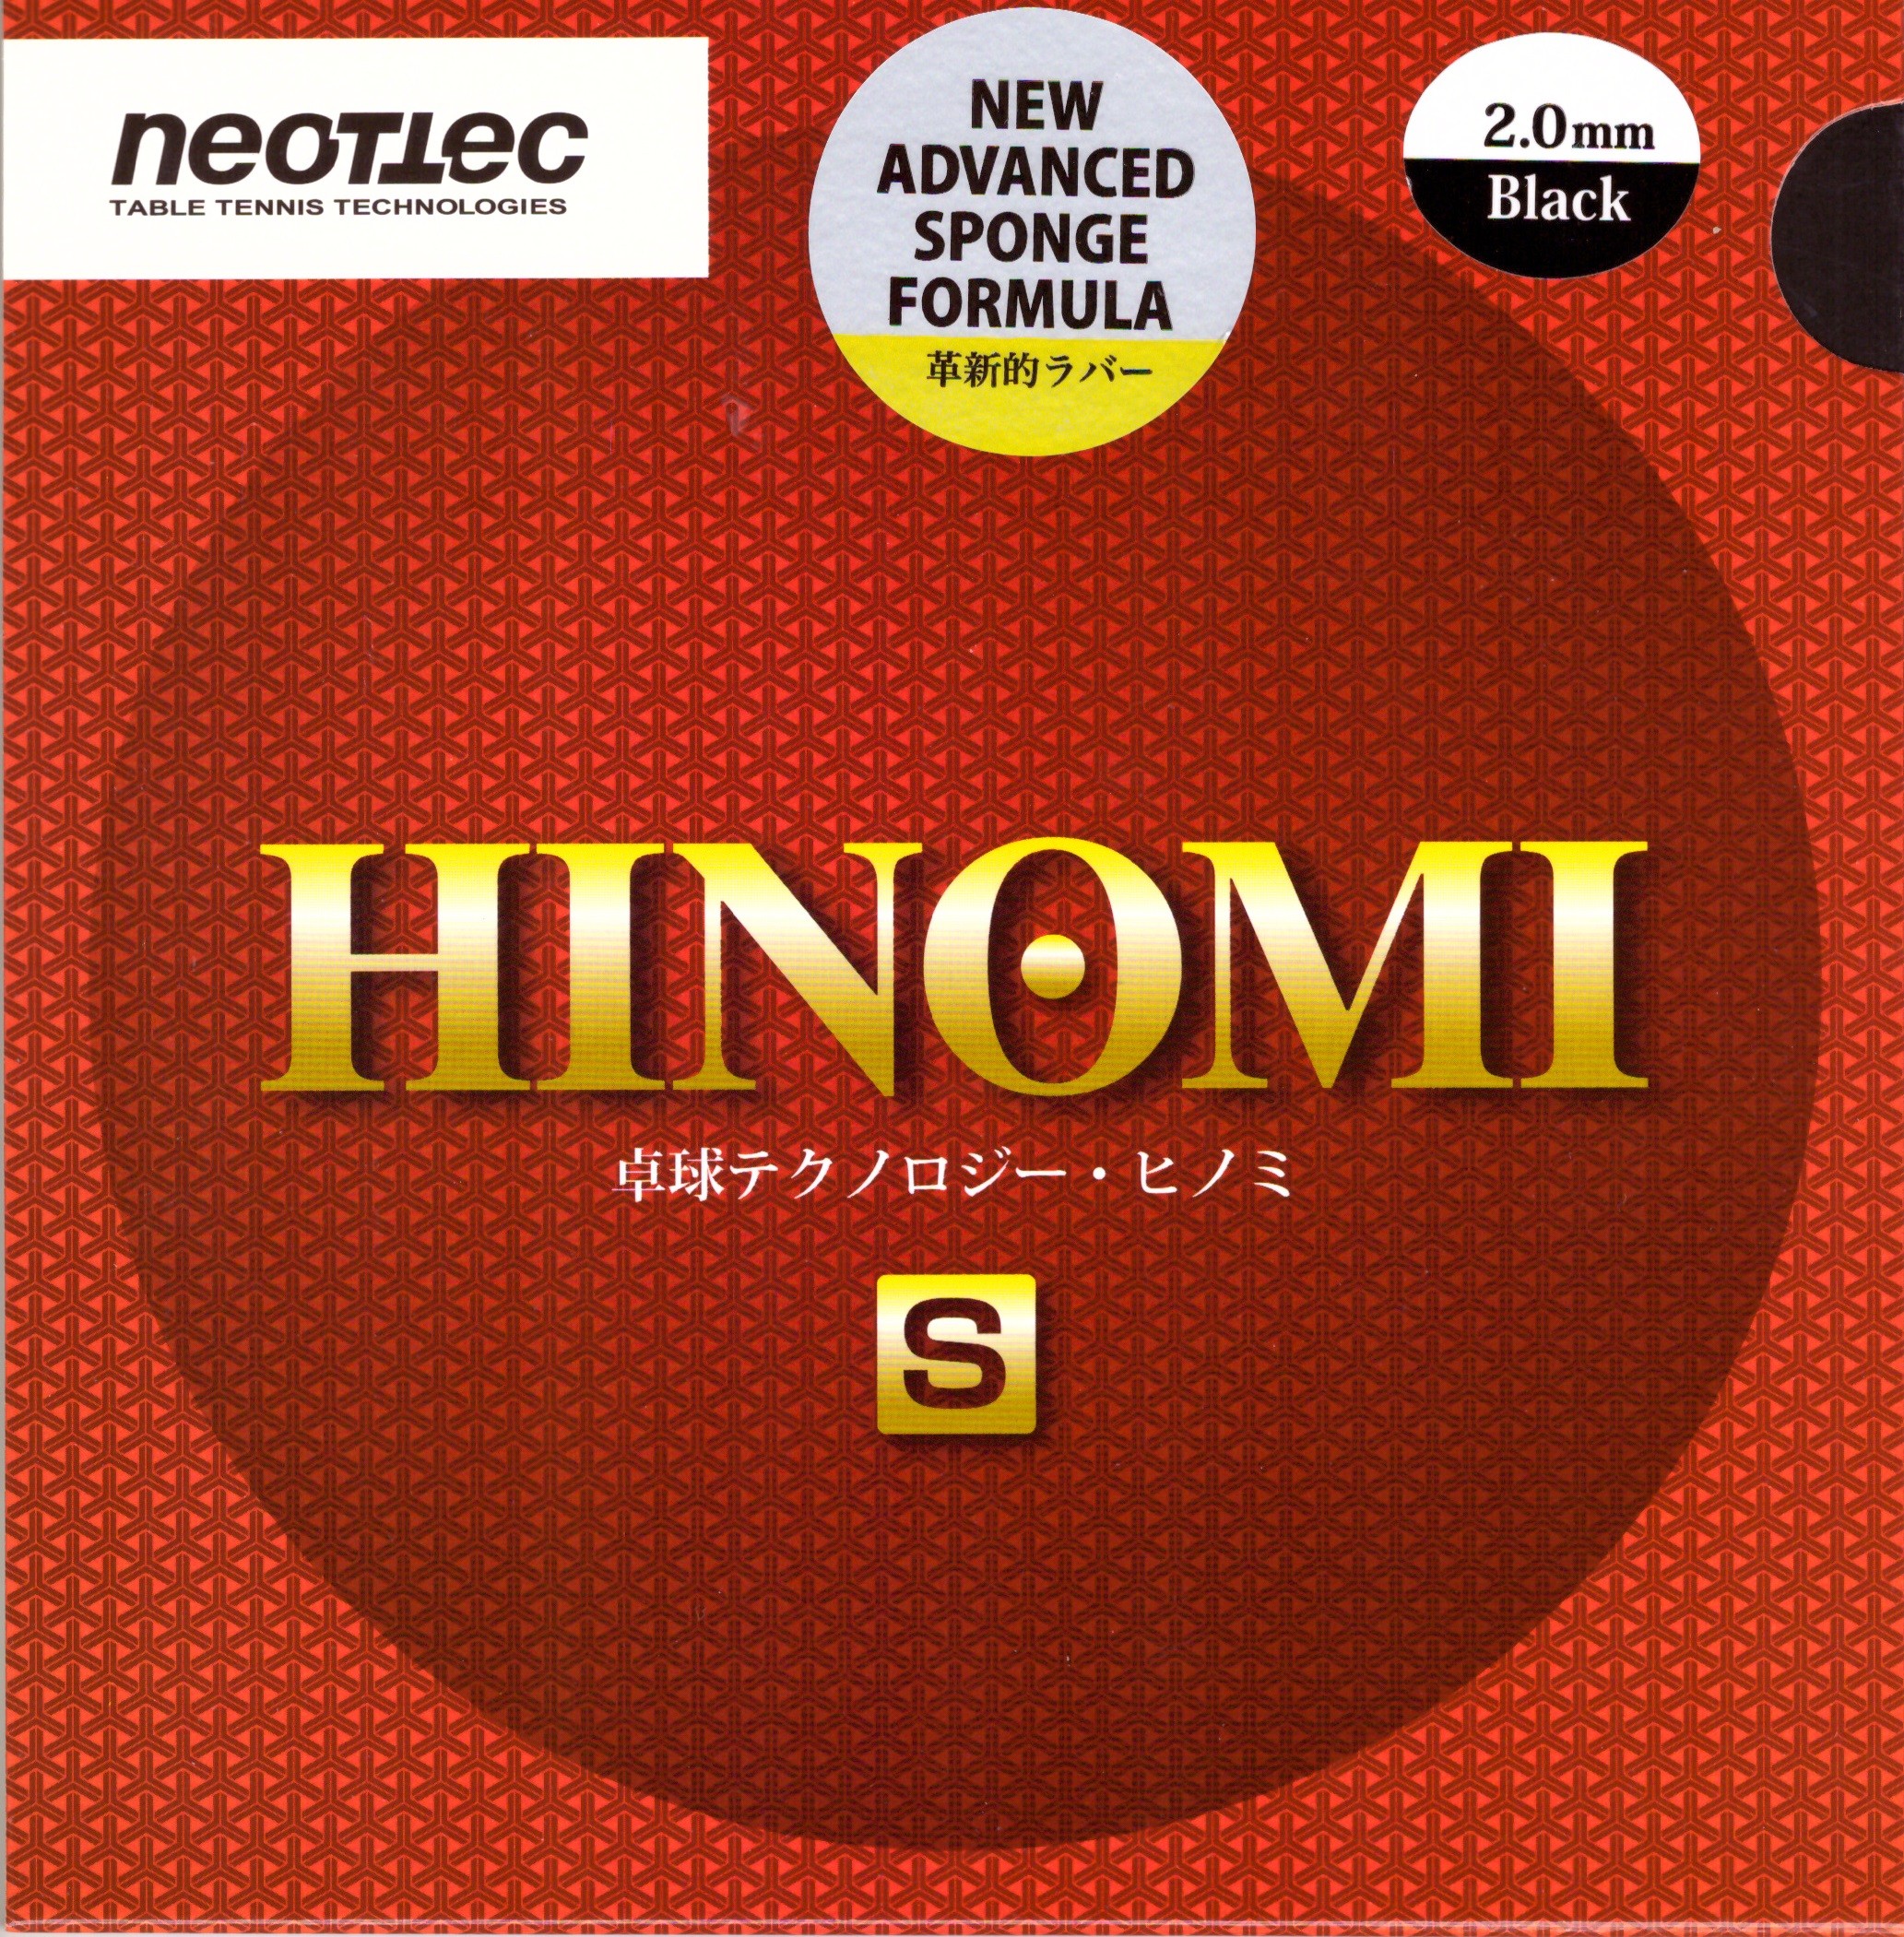 Neottec Hinomi-S   (TT11)